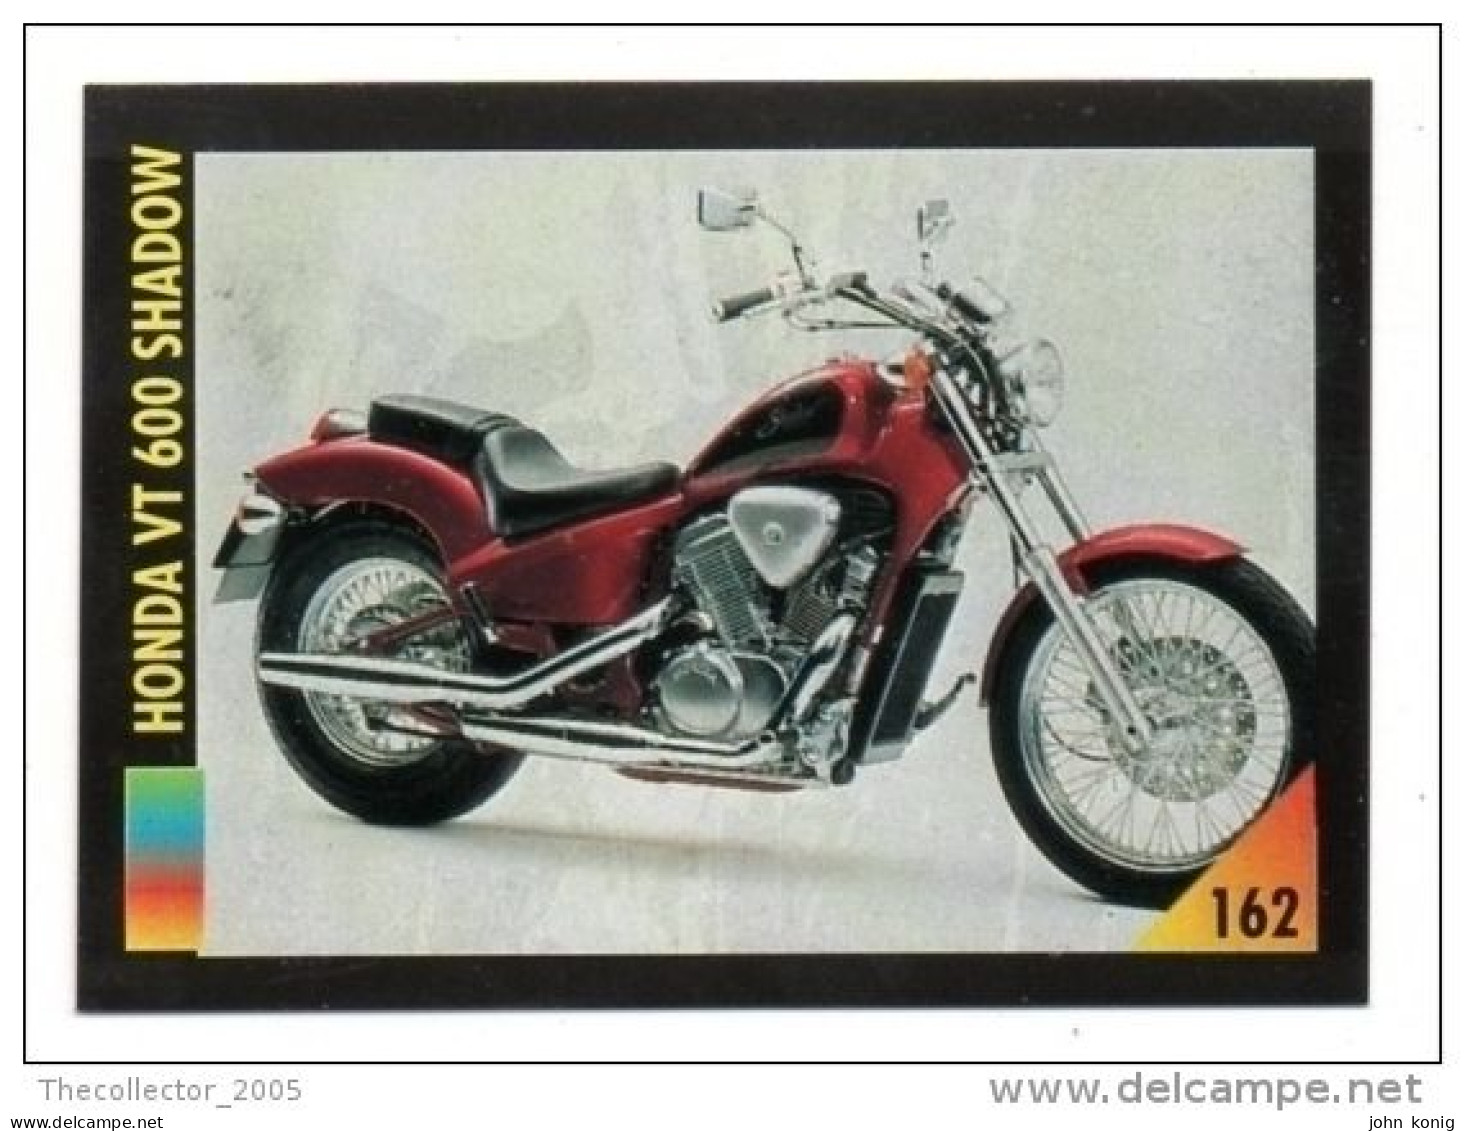 FIGURINA TRADING CARDS - LA MIA MOTO - MY MOTORBIKE - MASTERS EDIZIONI (1993) - HONDA VT 600 SHADOW - Moteurs